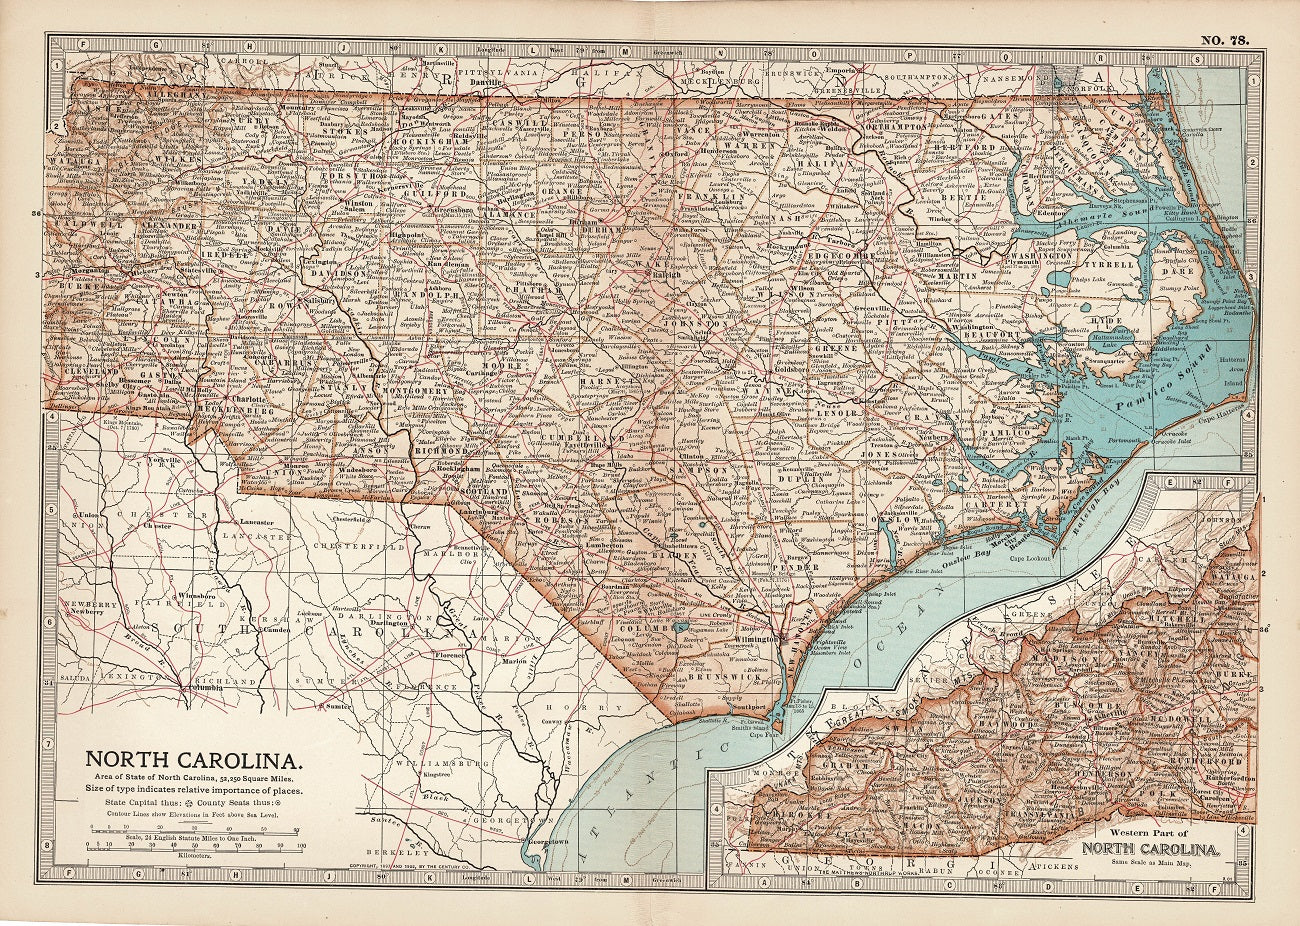 North Carolina antique map published in Encyclopaedia Britannica 1903